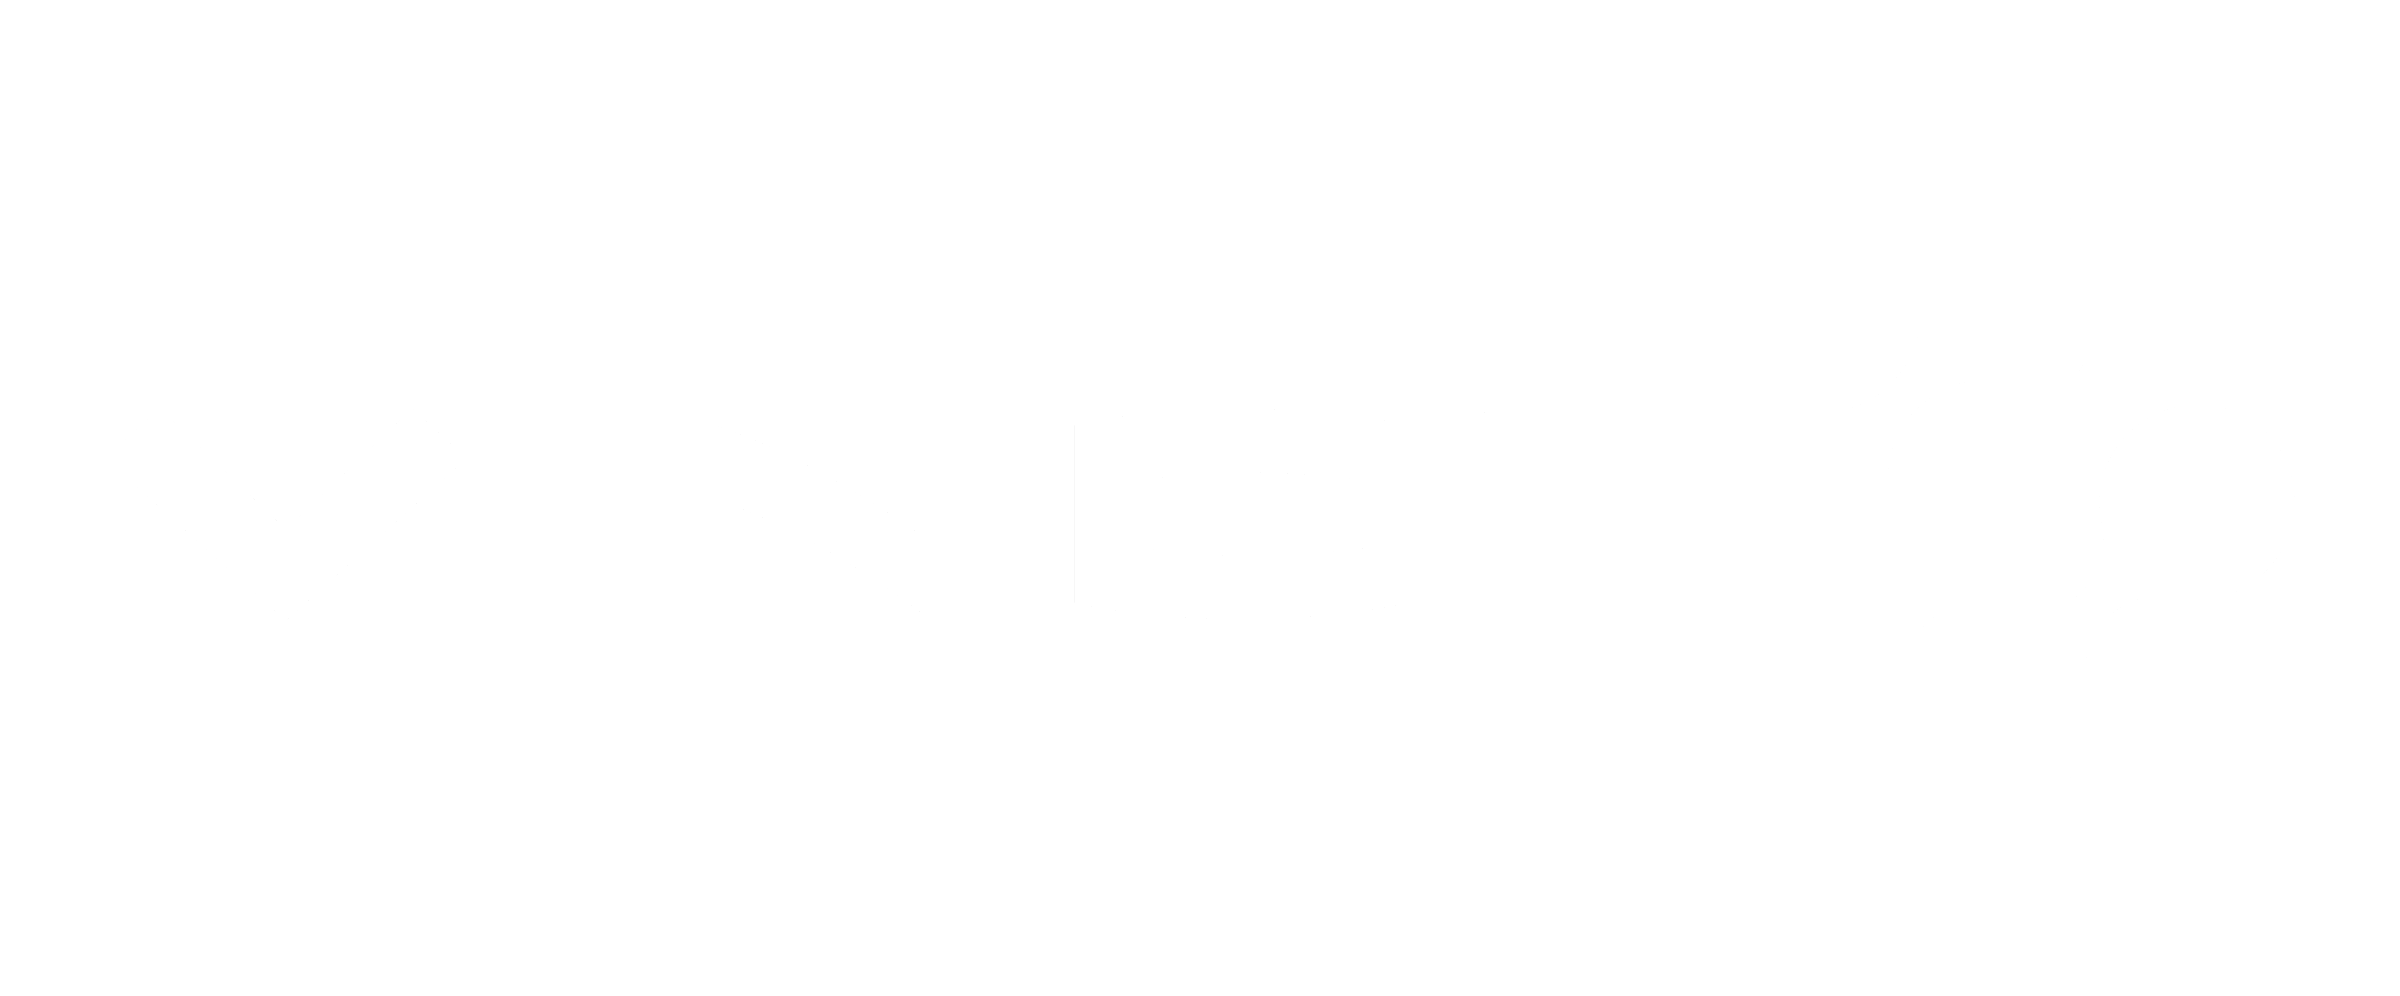 Logo Vinci